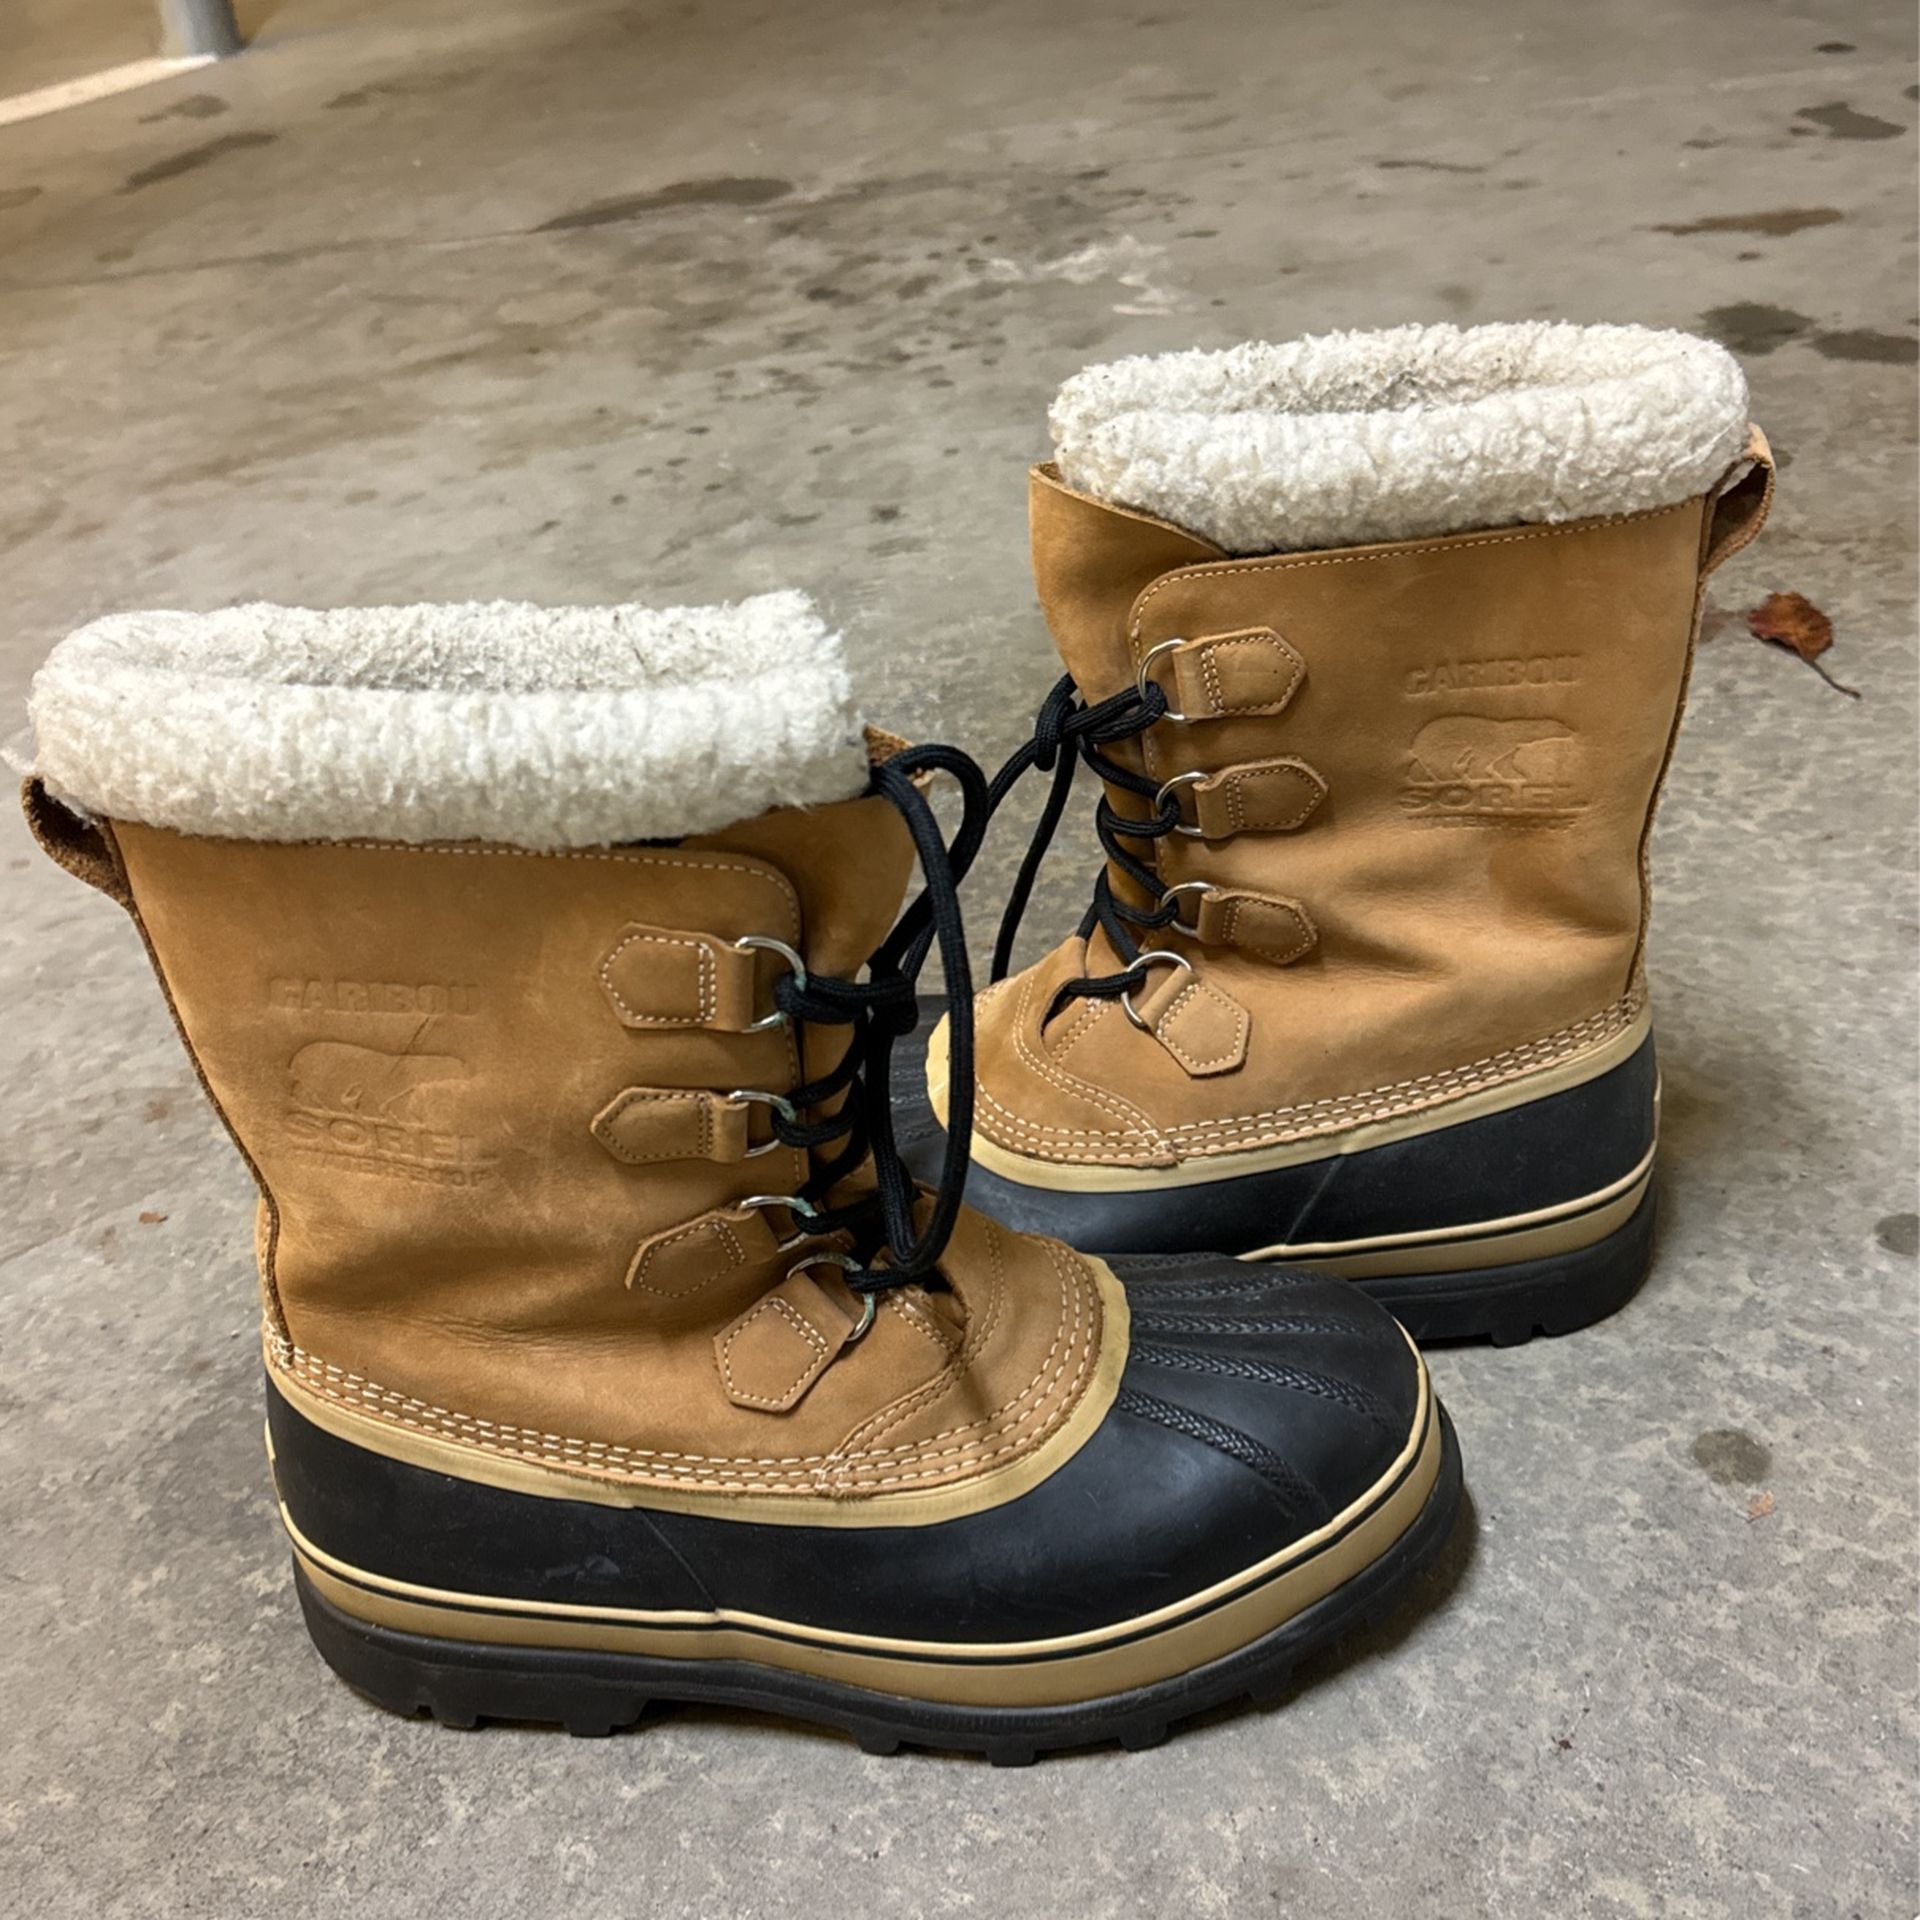 Sorel Winter Boots, size 11 